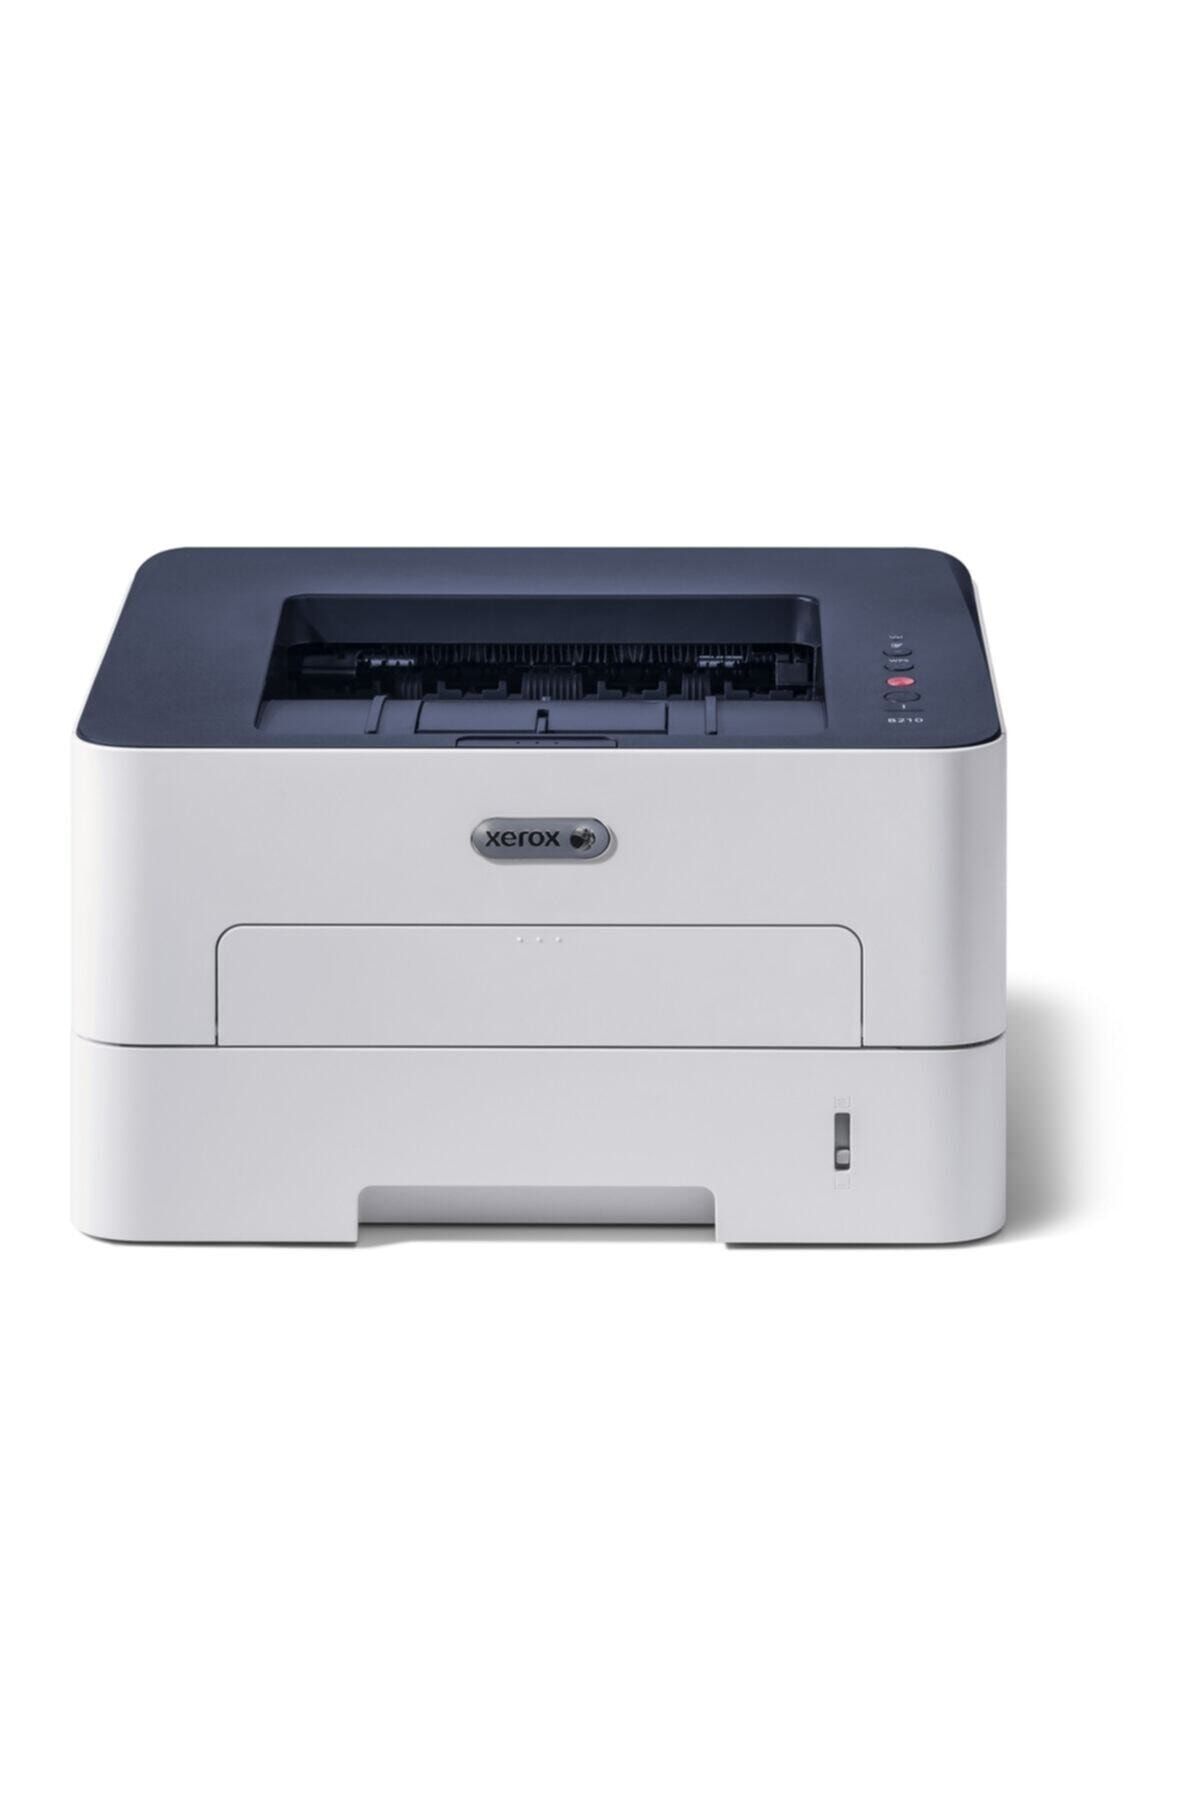 Купить принтер xerox phaser 3020. Принтер Xerox Phaser 3052. Принтер Xerox 3260. Принтер Xerox WORKCENTRE 3215. Принтер Xerox Phaser 3260dn.